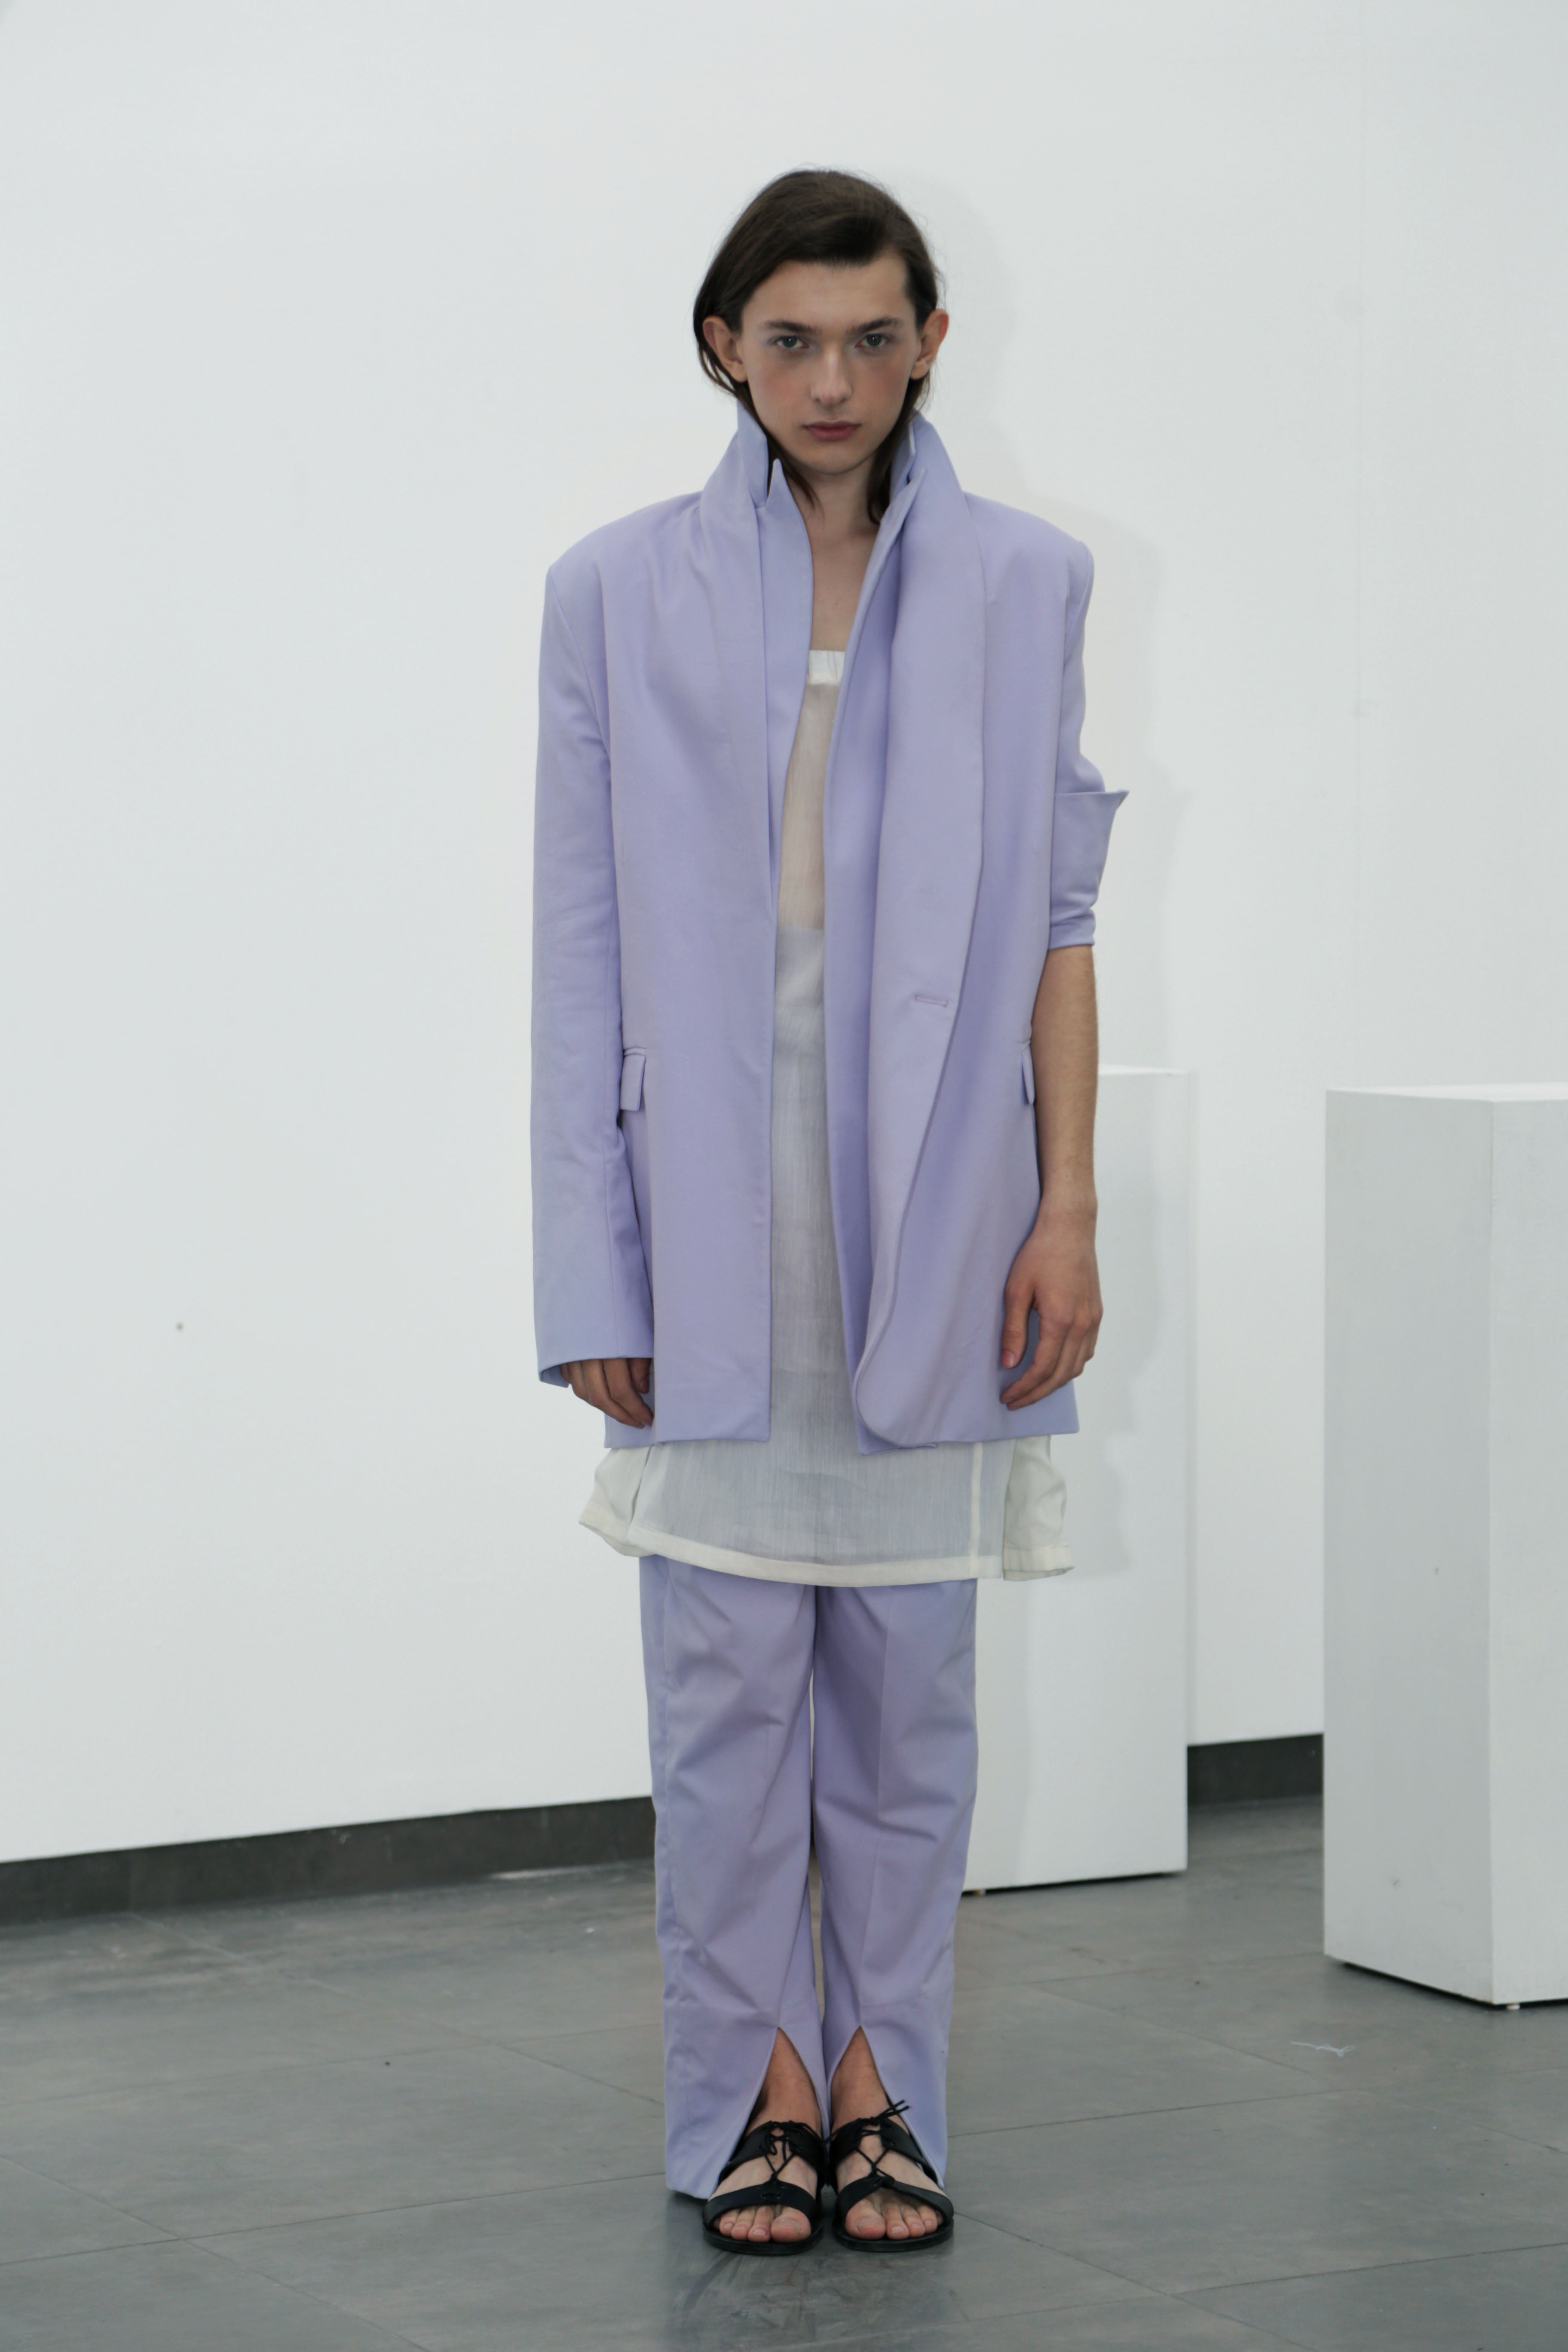 Asymmetric lavender jacket - Ludus Agender Label